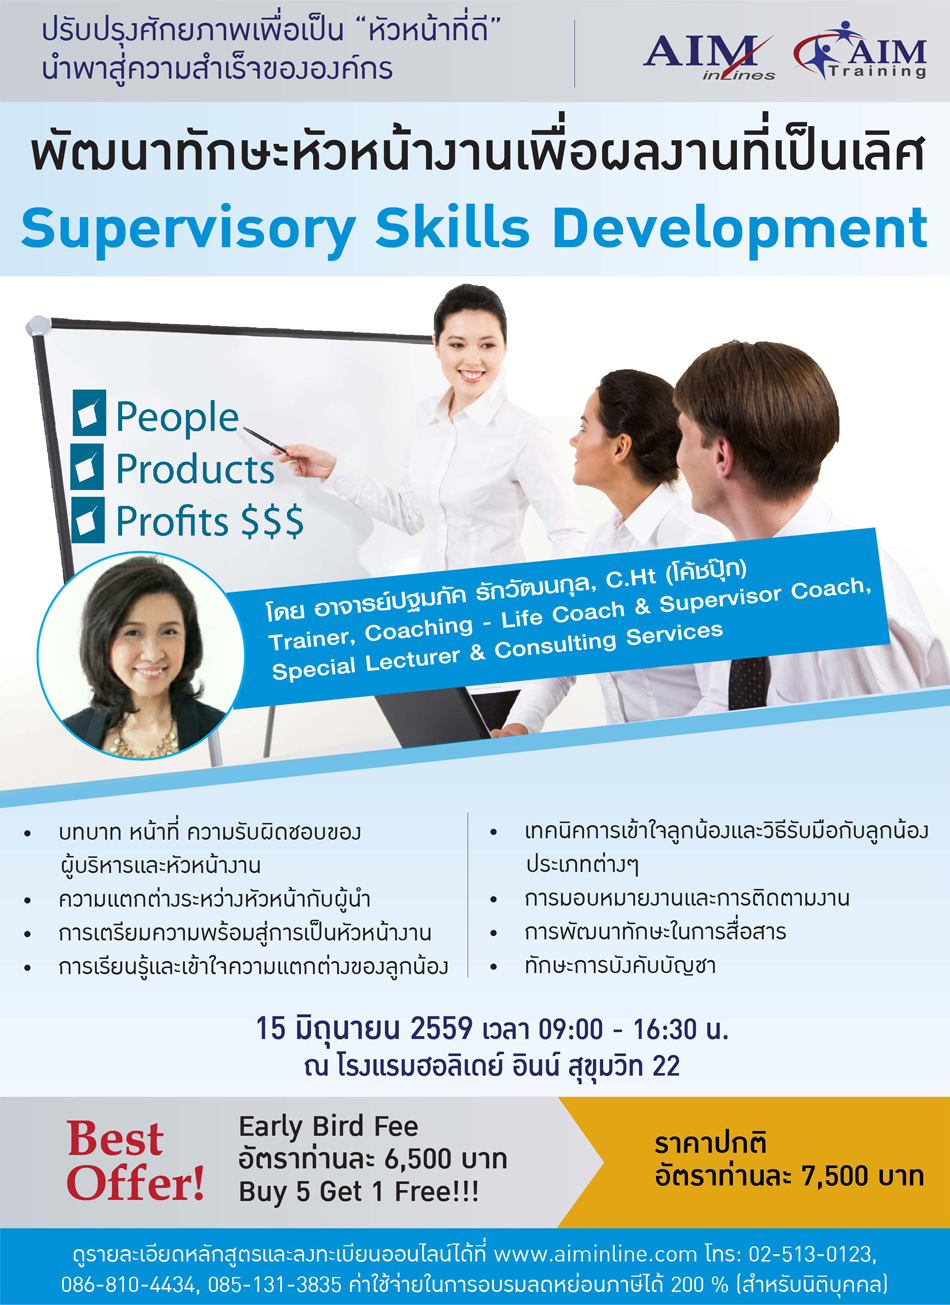 Supervisory Skills Development Workshop